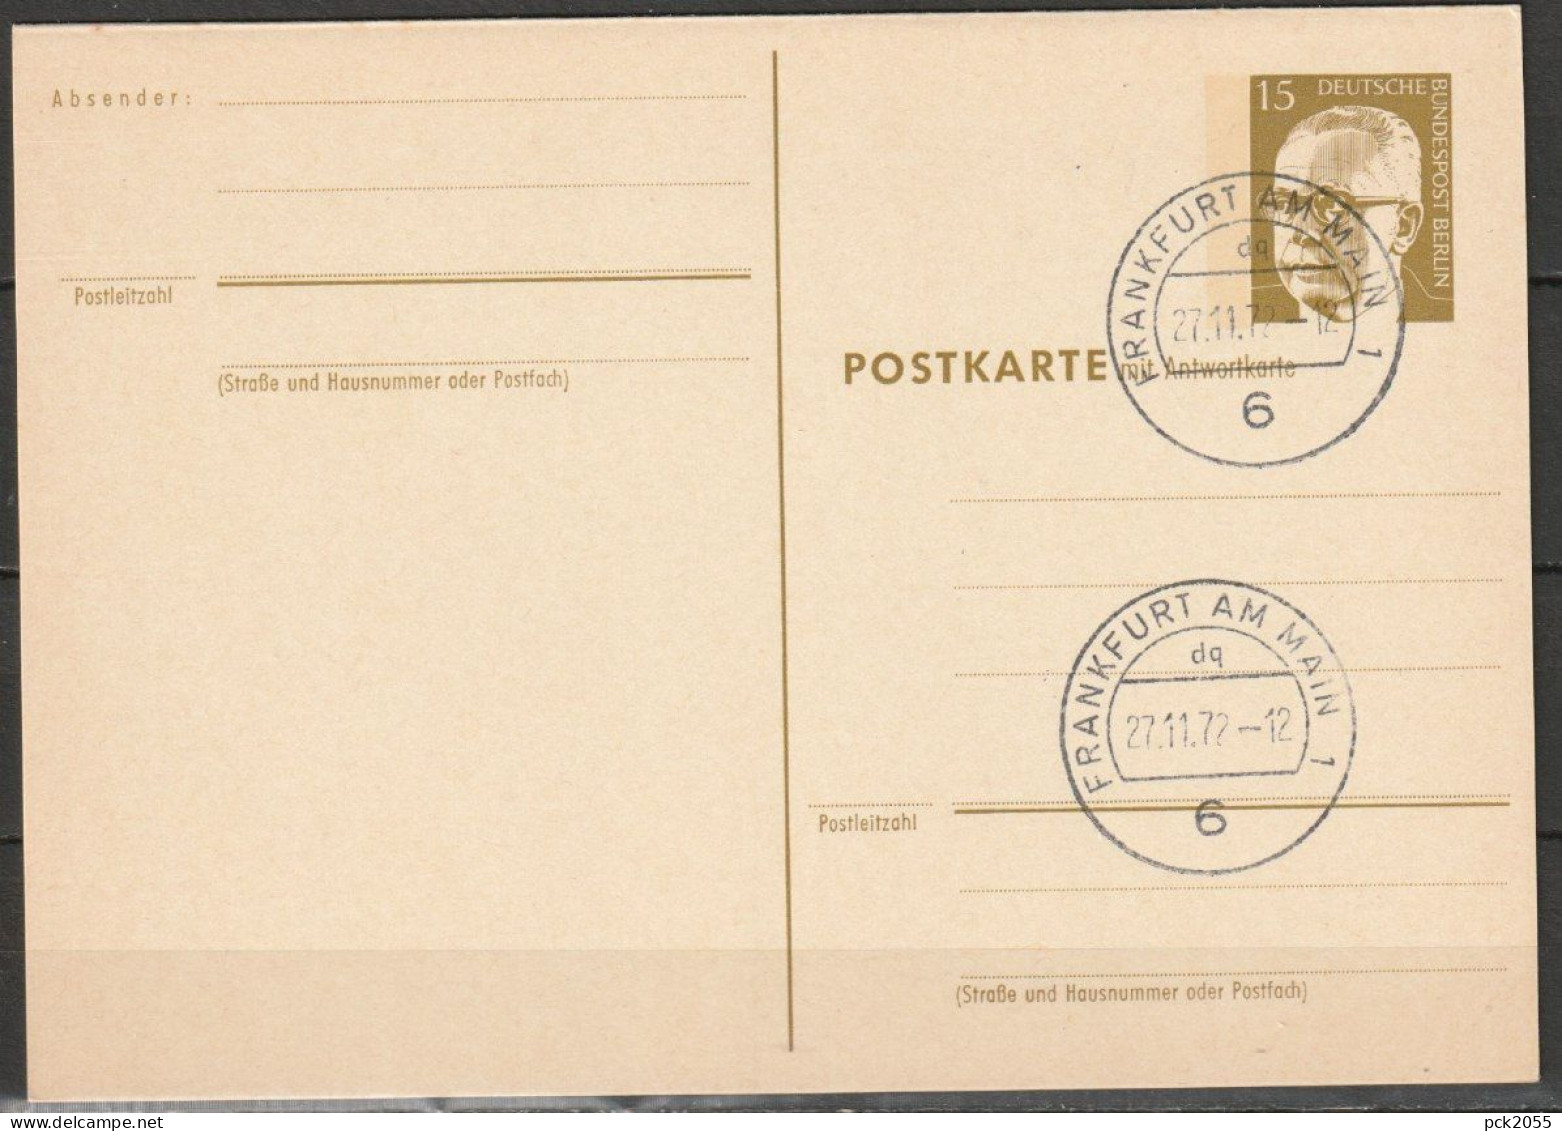 Berlin Ganzsache 1971/72 Mi.-Nr. P 87 Tagesstempel FRANKFURT 27.11.72  ( PK 302 ) - Postcards - Used